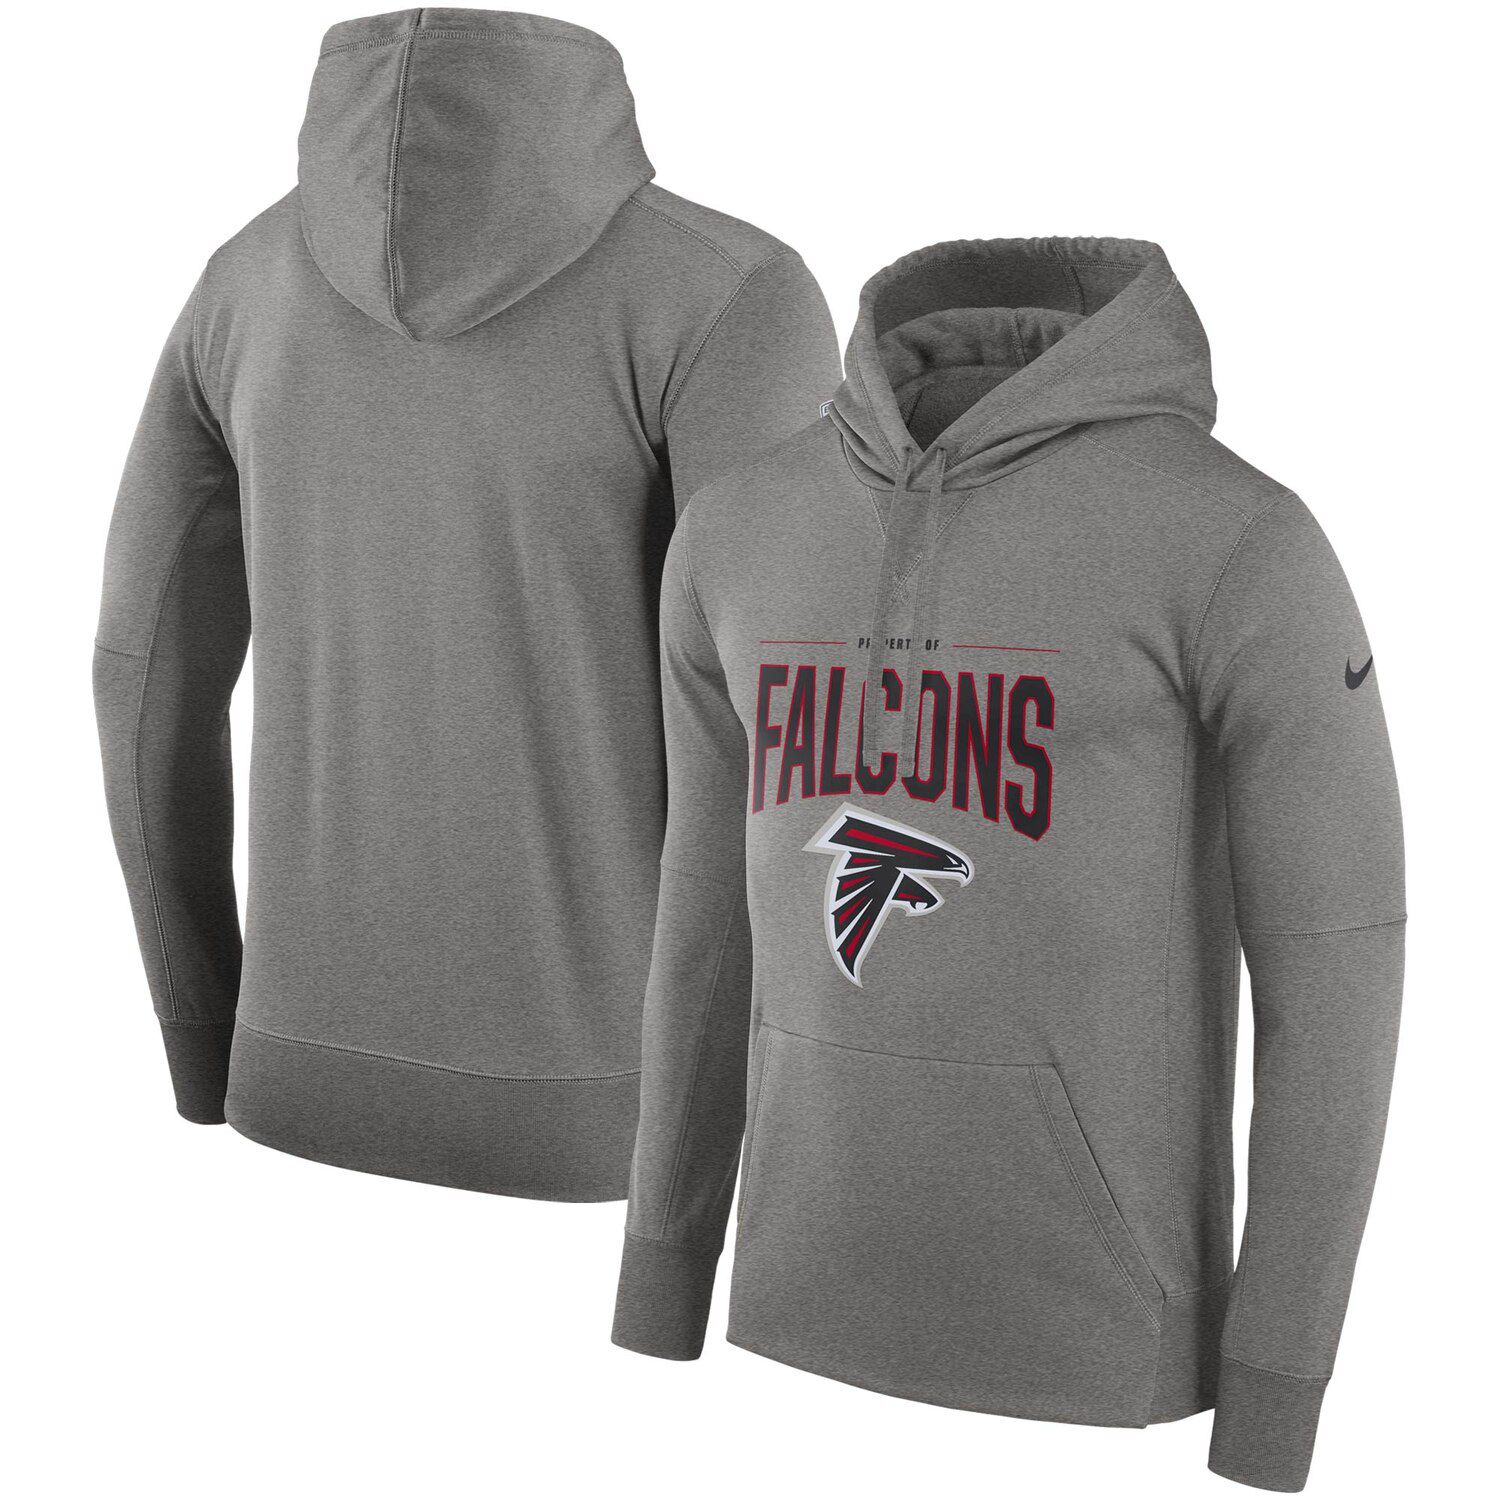 falcons hoodie amazon